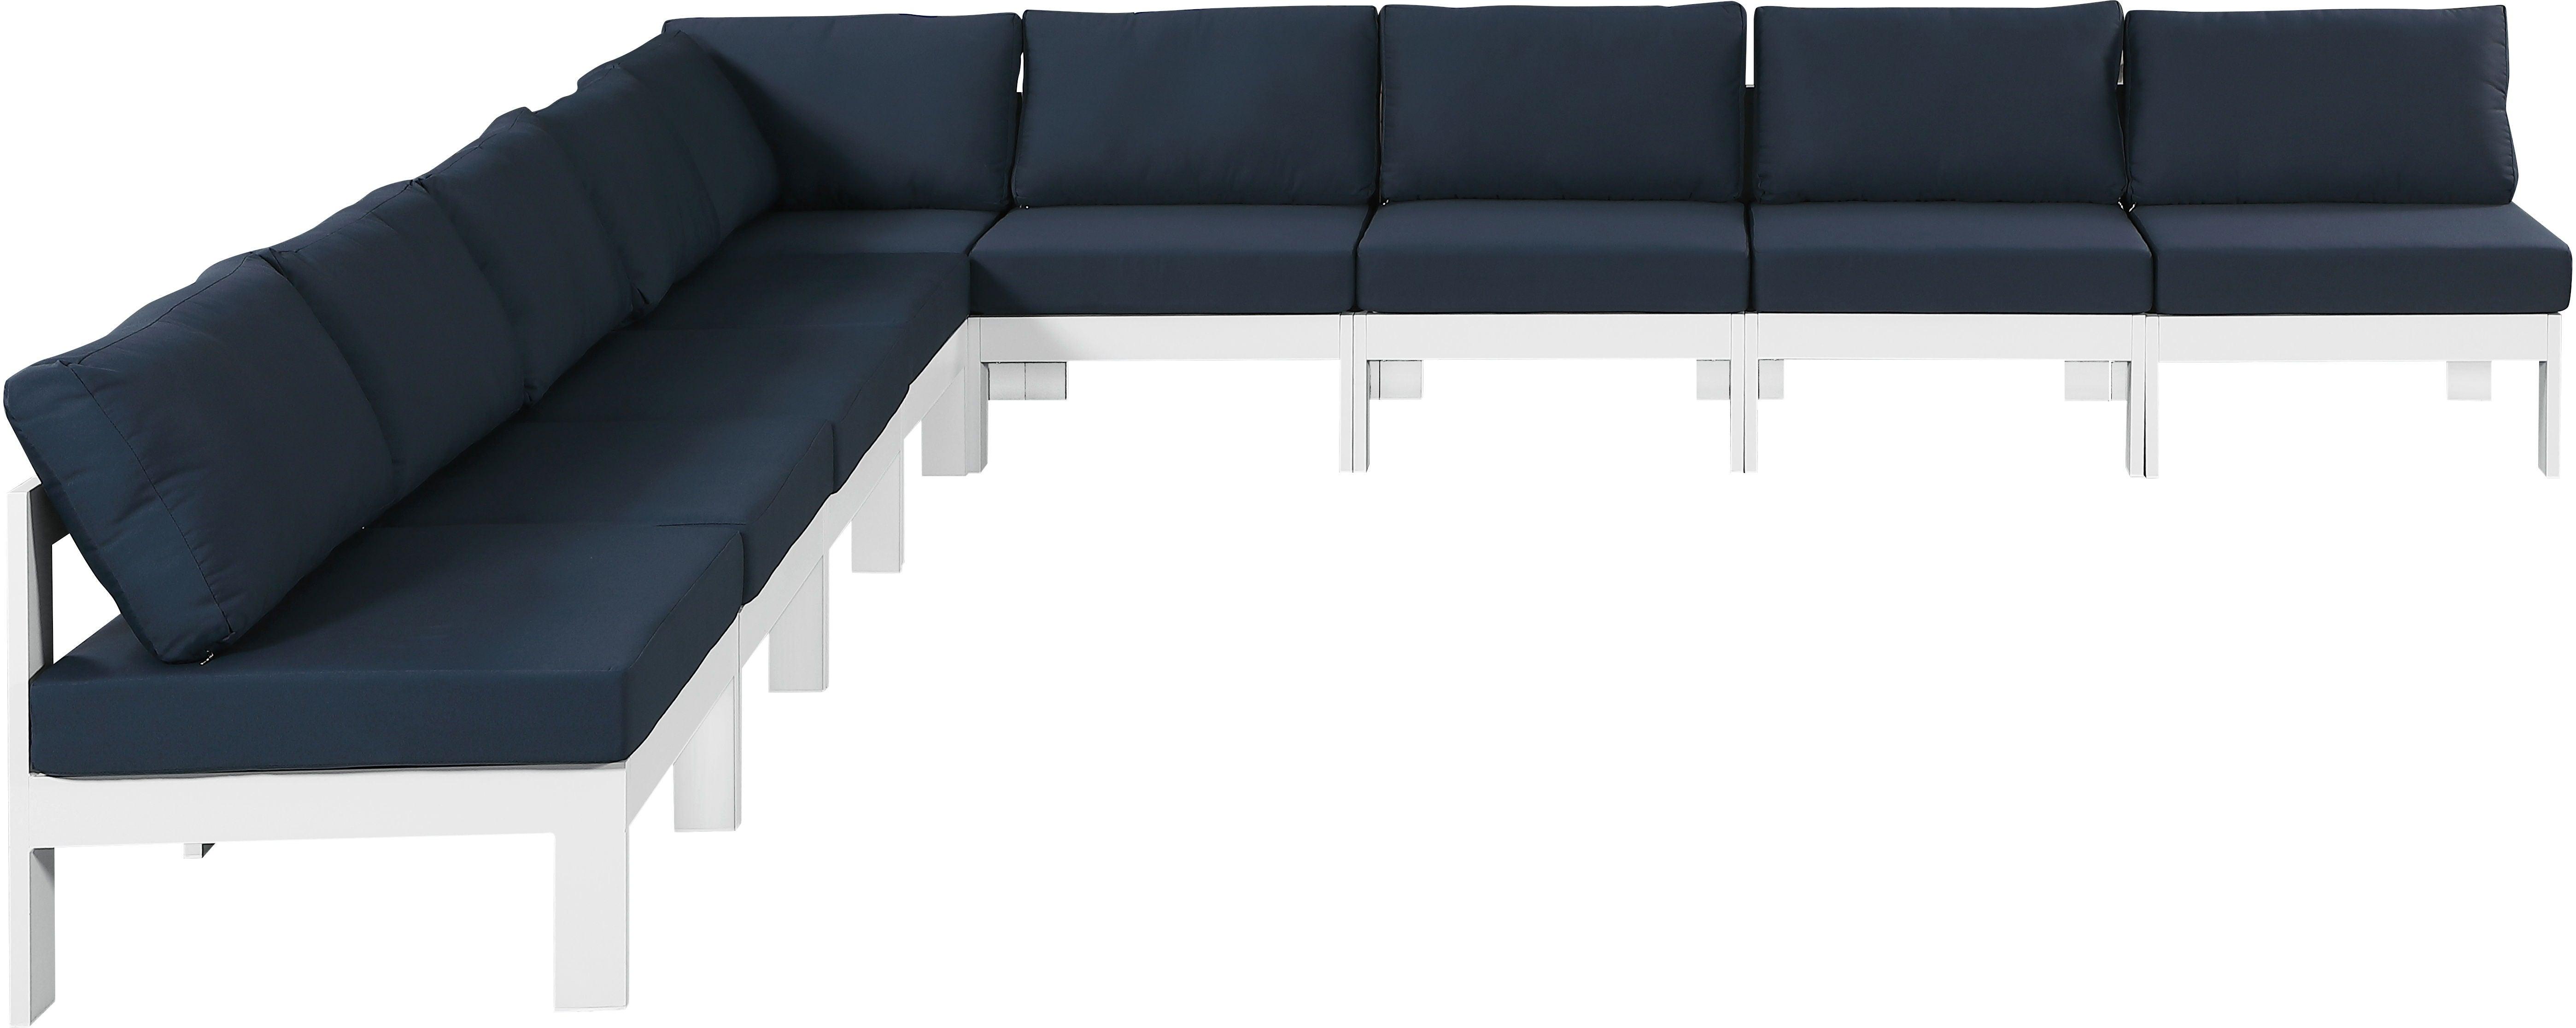 Meridian Furniture - Nizuc - Outdoor Patio Modular Sectional 9 Piece - Navy - Fabric - 5th Avenue Furniture